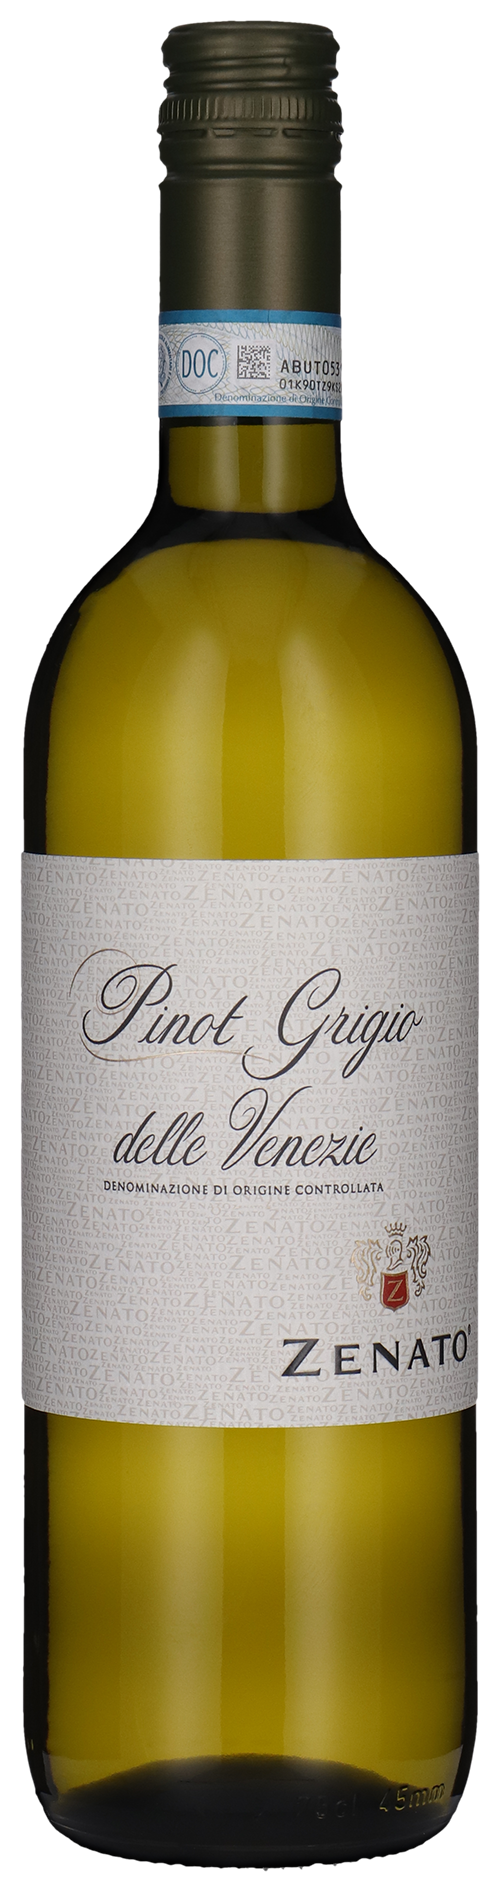 Veneto Grigio delle Venezie, Zenato, Pinot